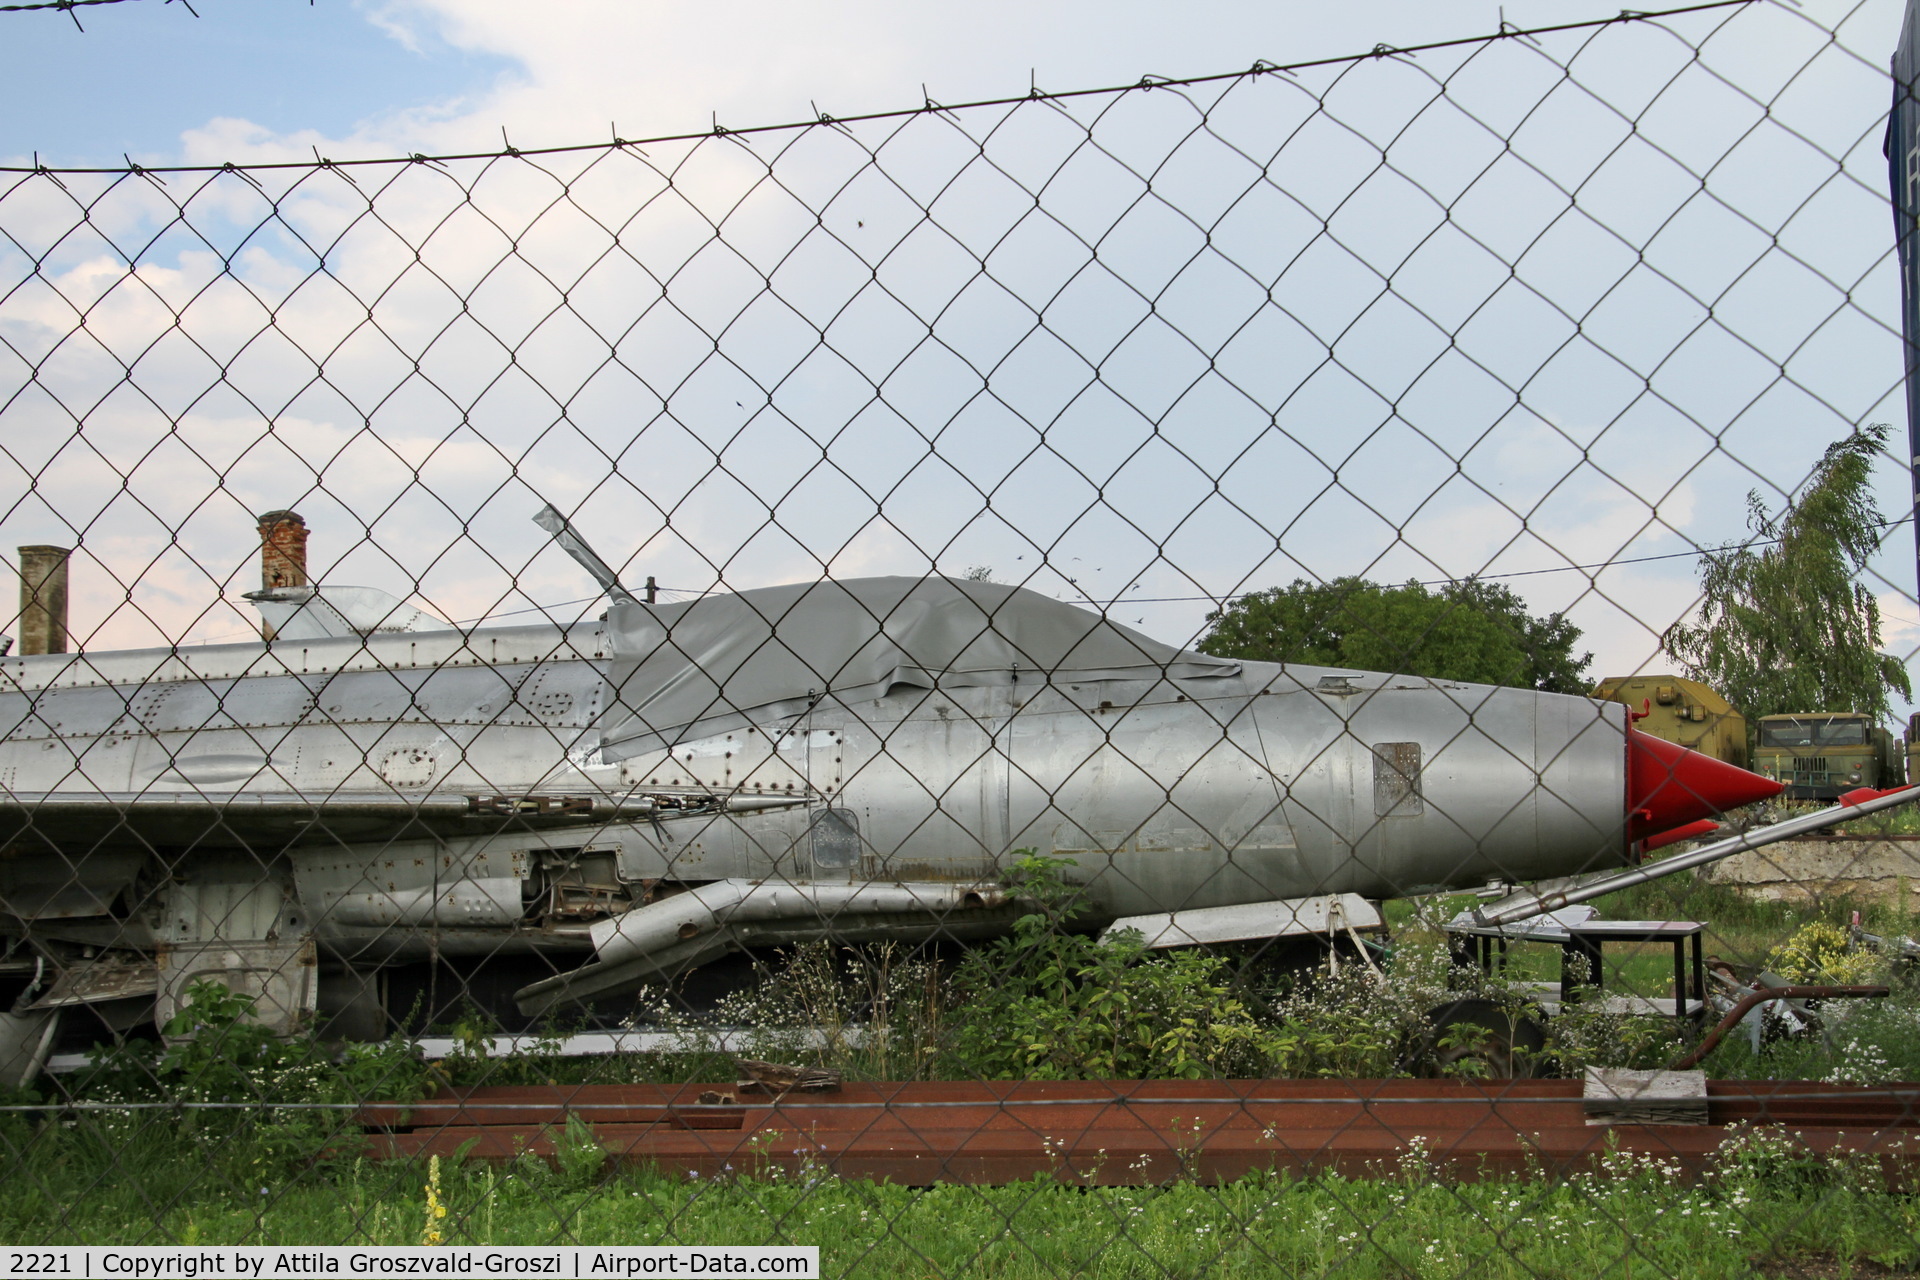 2221, 1974 Mikoyan-Gurevich MiG-21F-13 C/N 742221, Kövesgyürpuszta oder depots, hungary